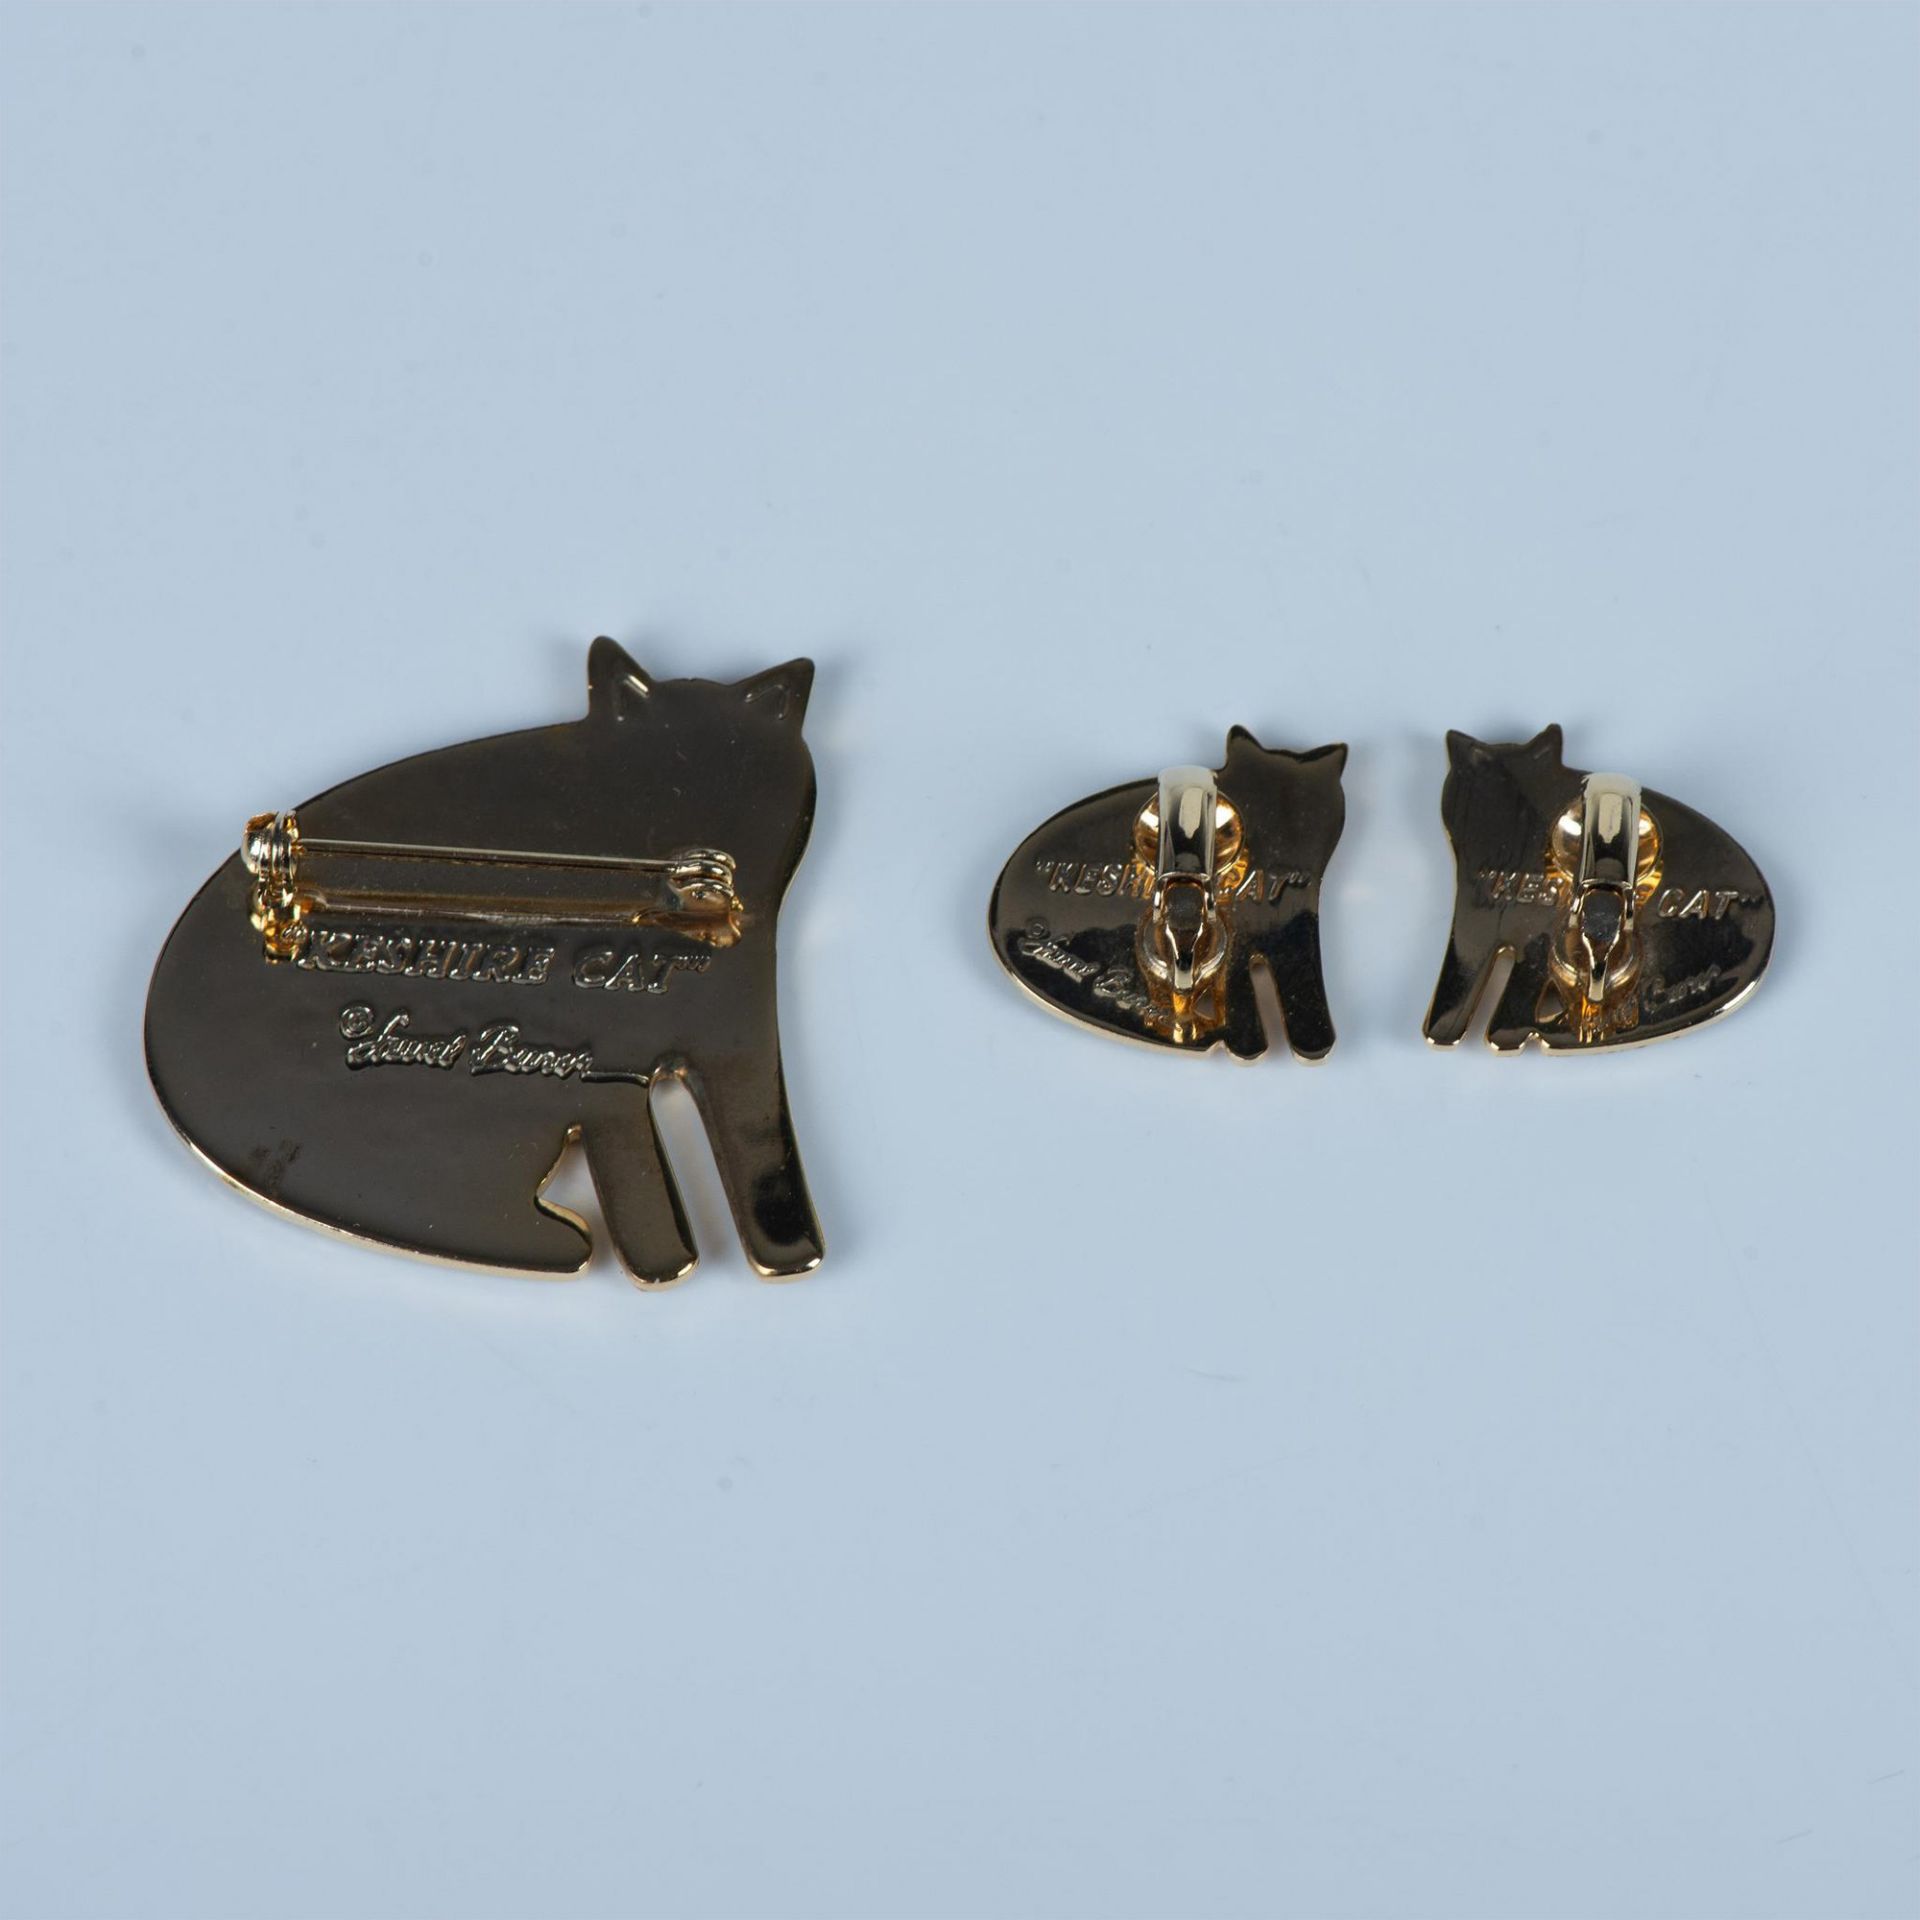 2pc Set Laurel Burch Keshire Cat Pin & Clip-On Earrings - Image 3 of 6